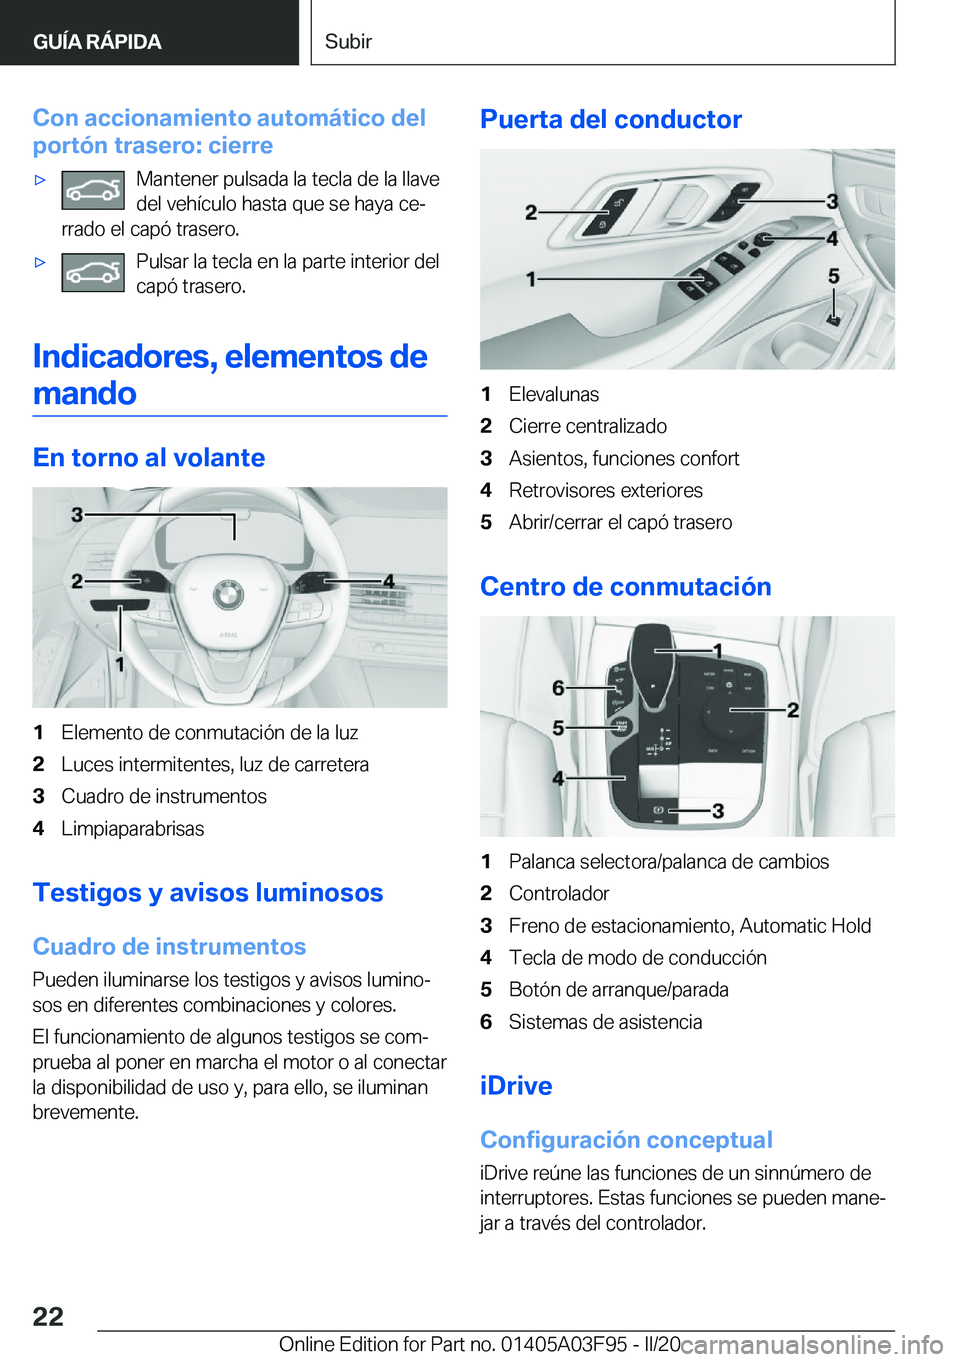 BMW 3 SERIES 2020  Manuales de Empleo (in Spanish) �C�o�n��a�c�c�i�o�n�a�m�i�e�n�t�o��a�u�t�o�m�